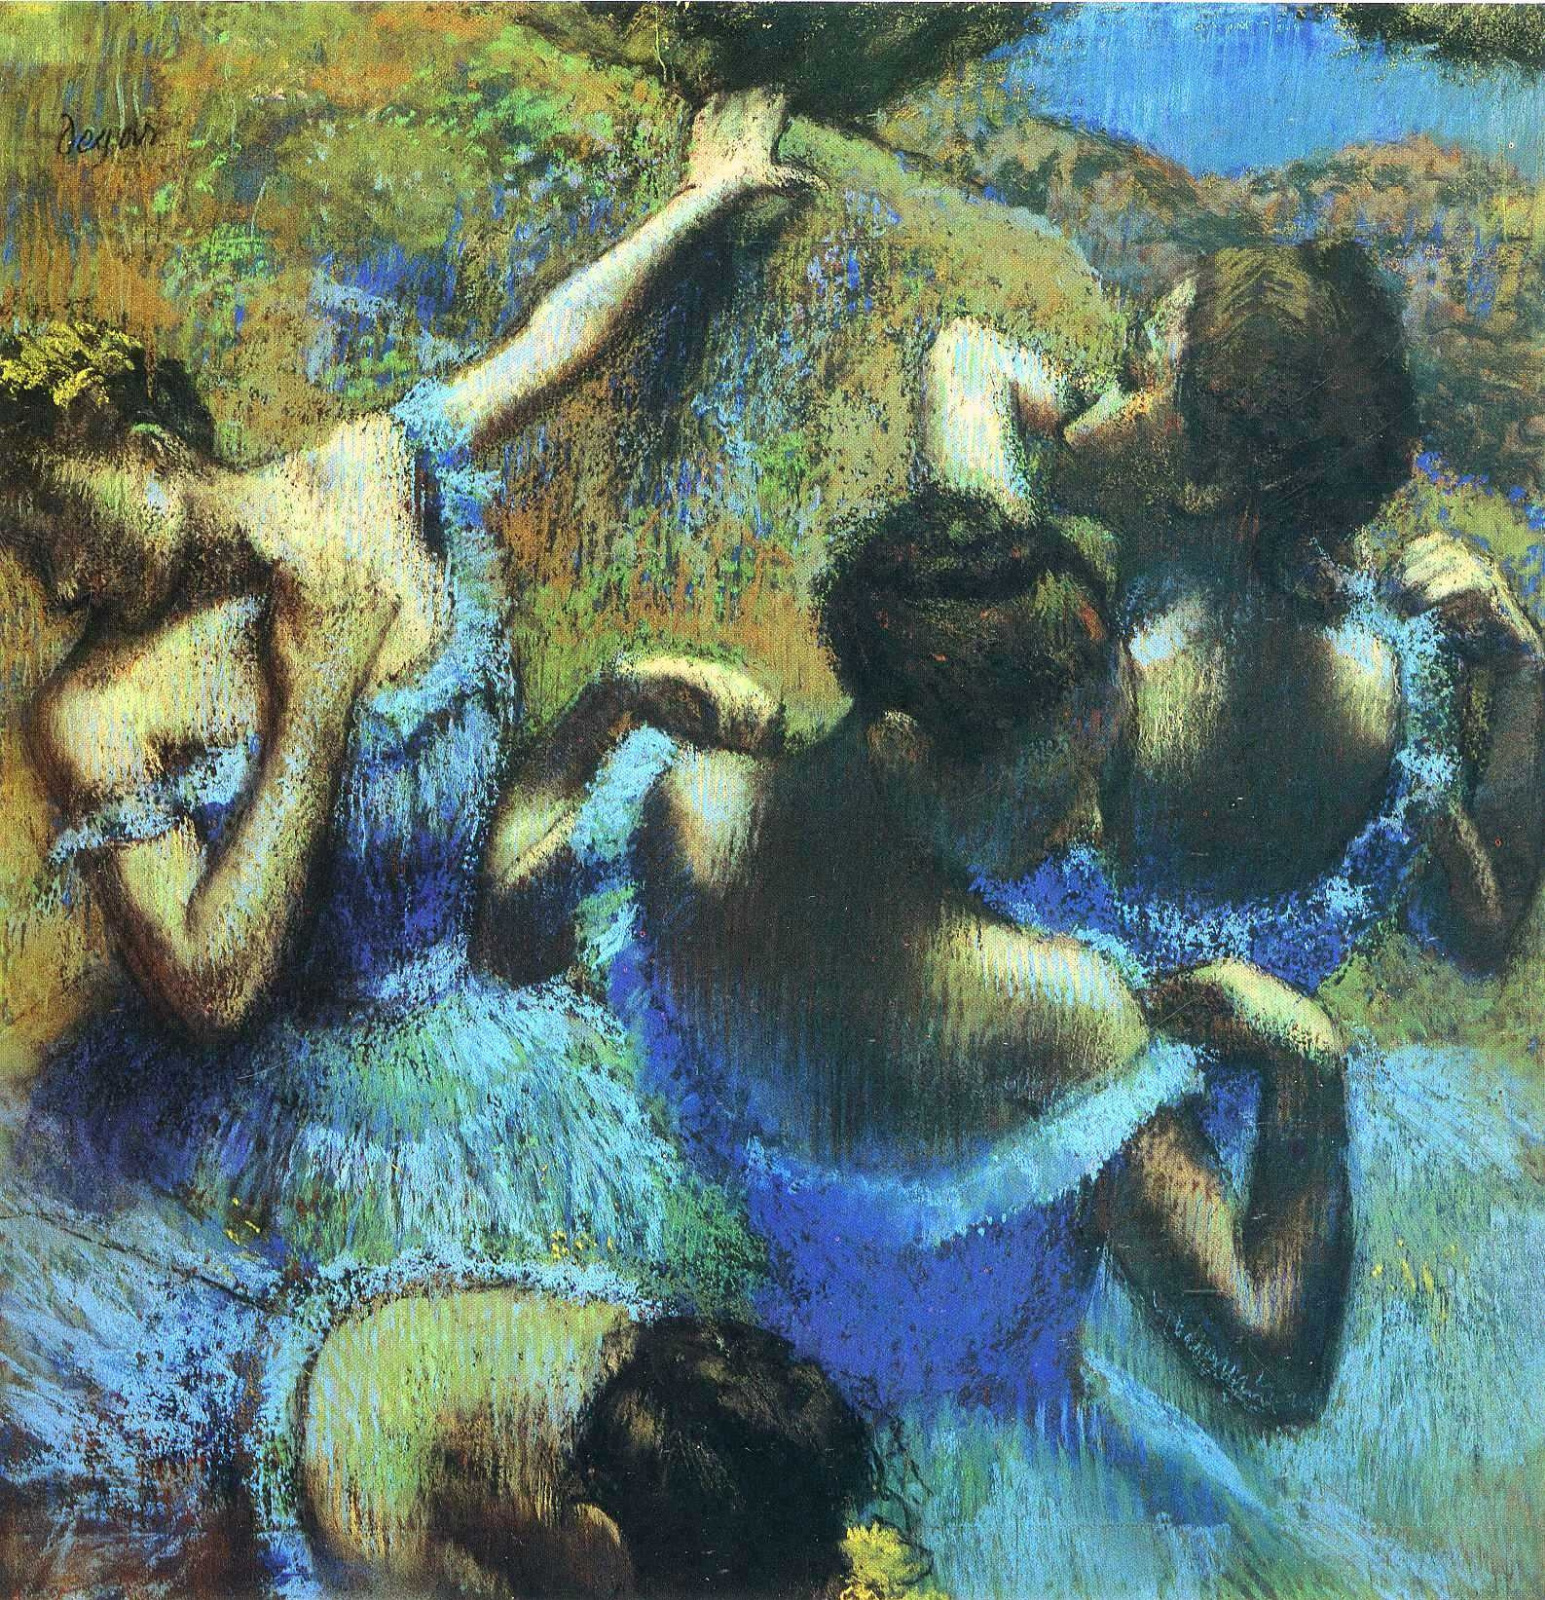 Buy a digital copy: Edgar Degas - Bailarinas azules, Moscow | Arthive